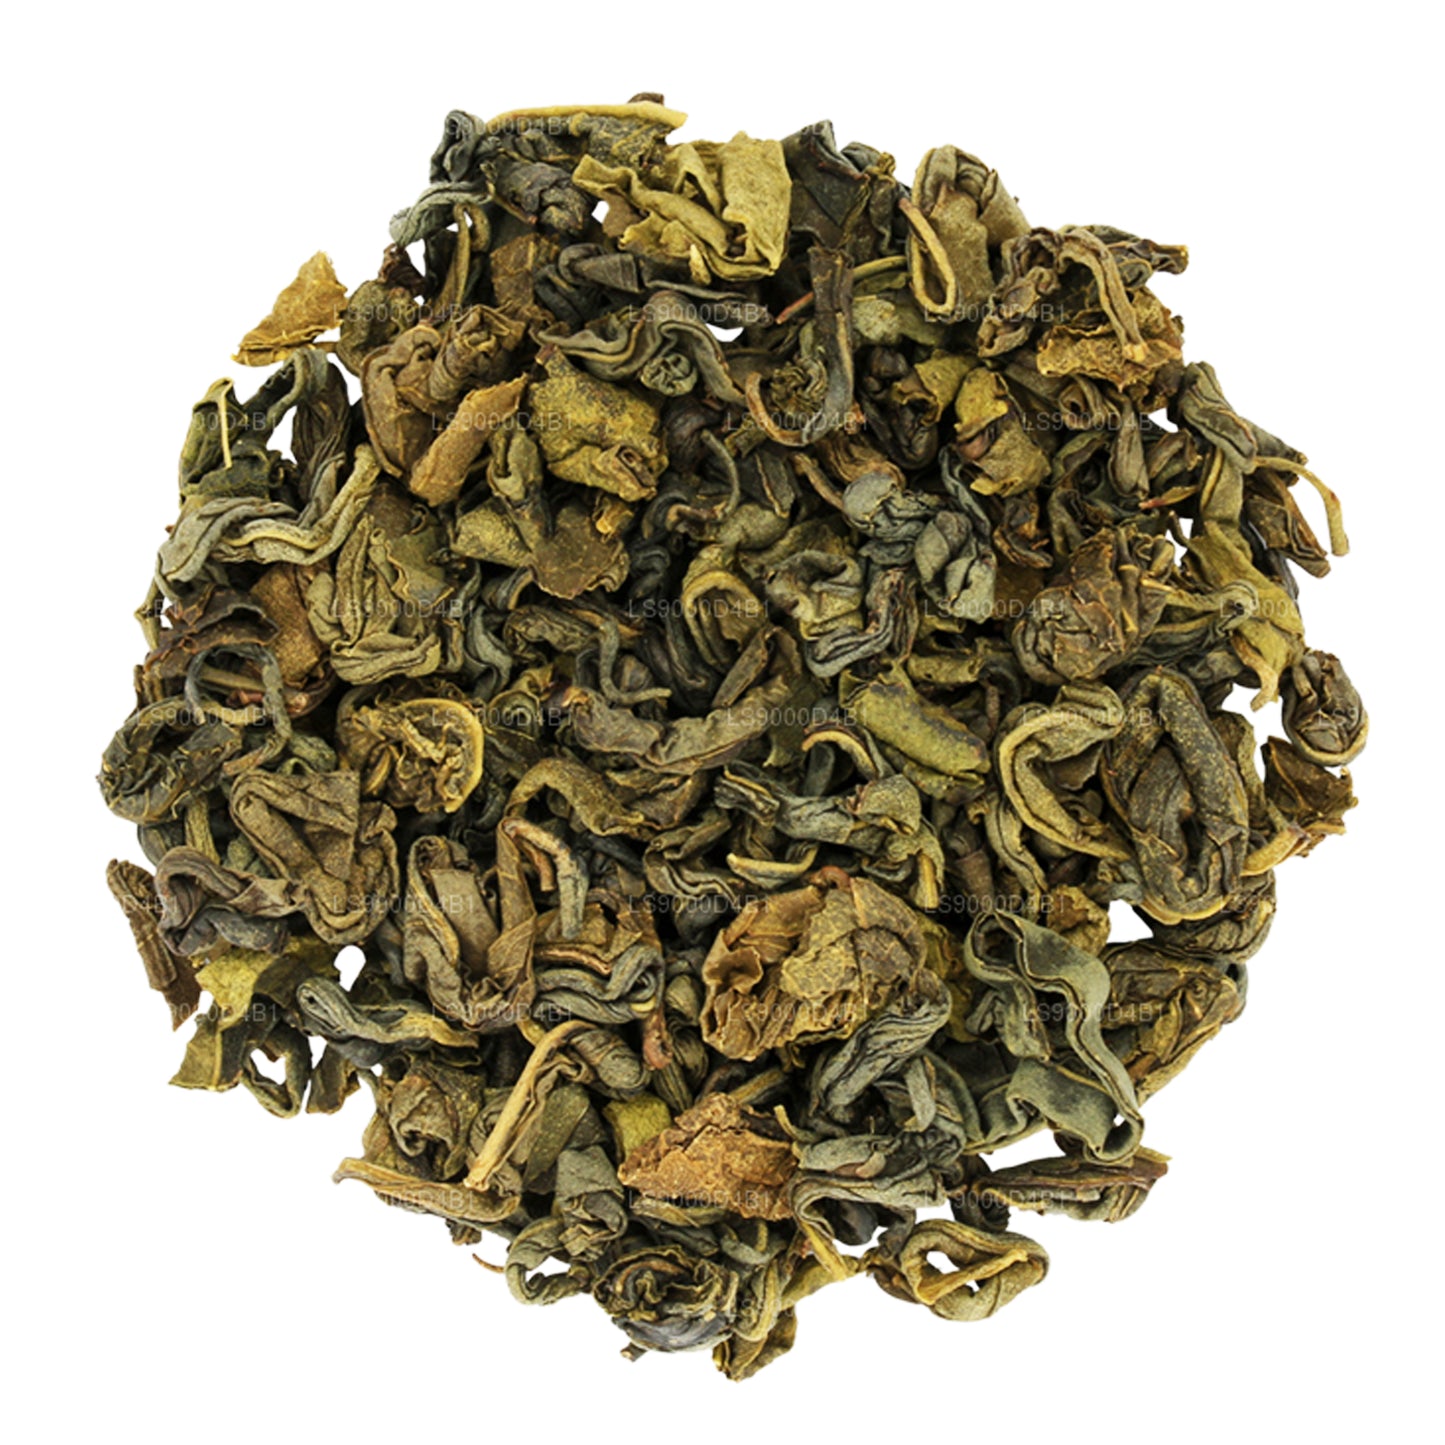 Basilur Island of Tea „Grün“ (100 g) Dose